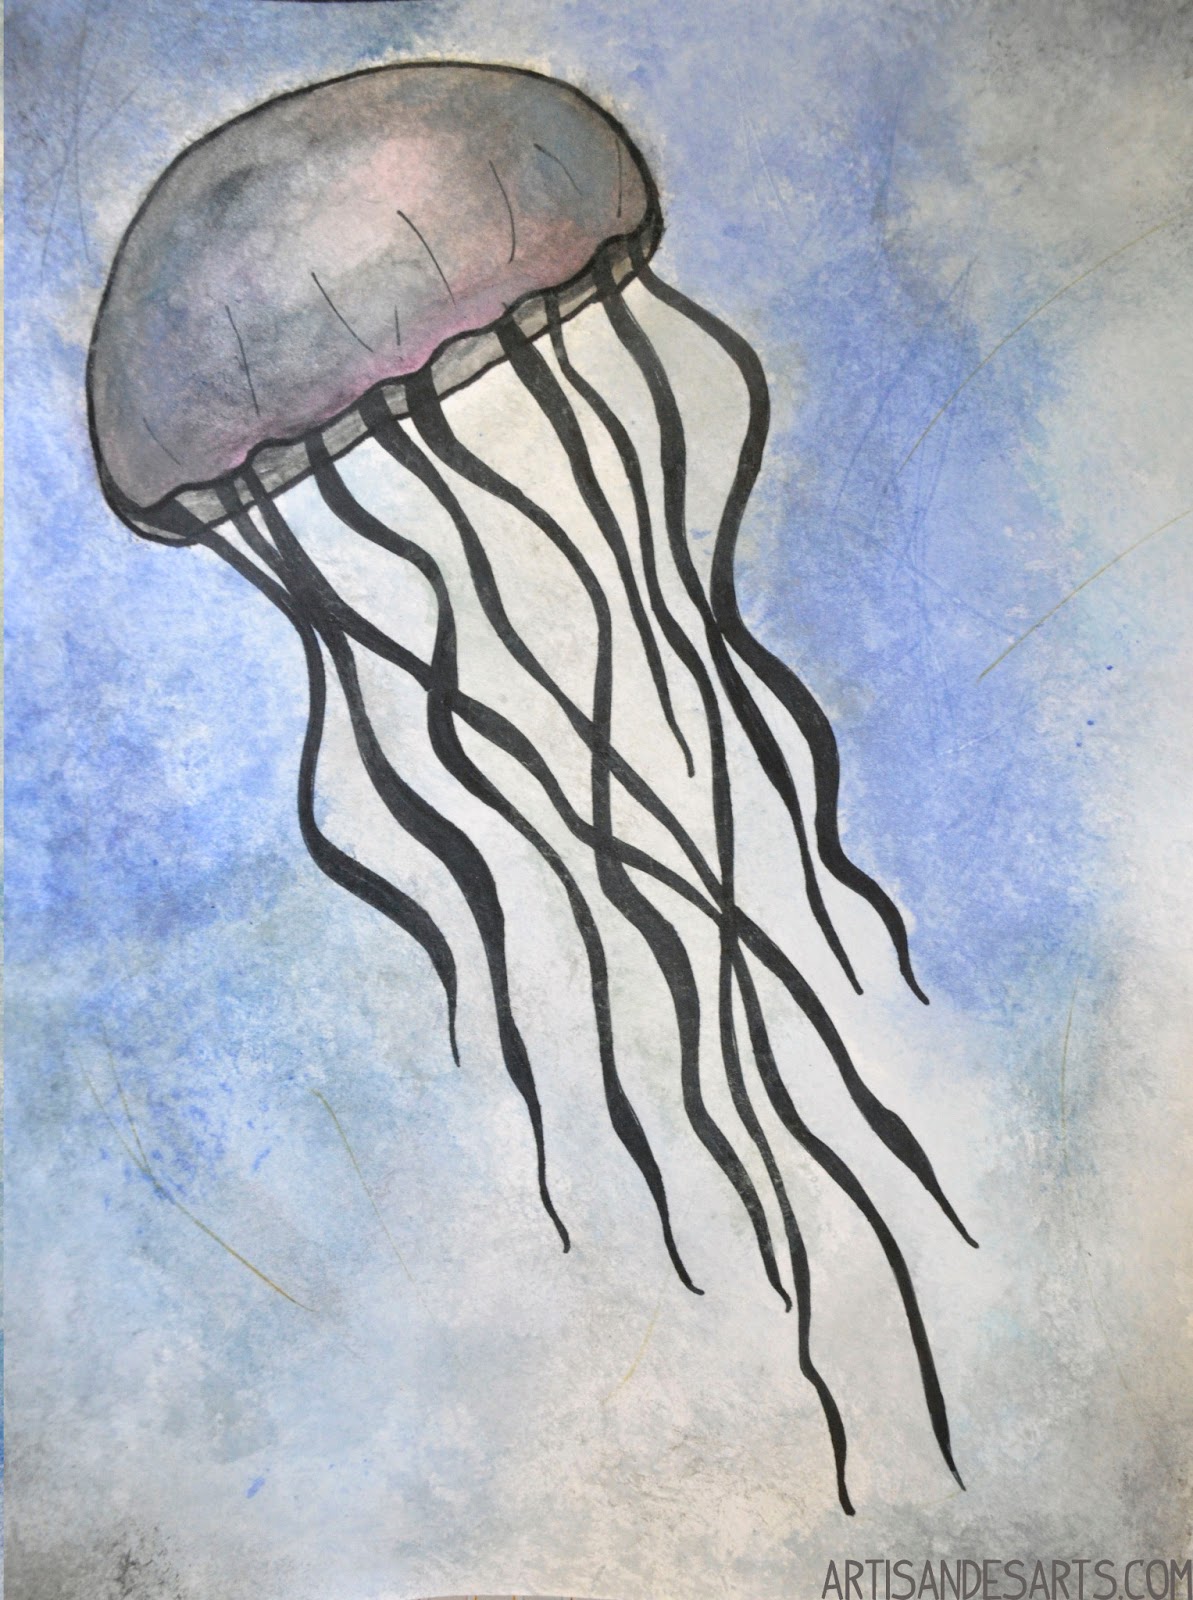 artisan des arts: Floating jellyfish - grade 5\/6